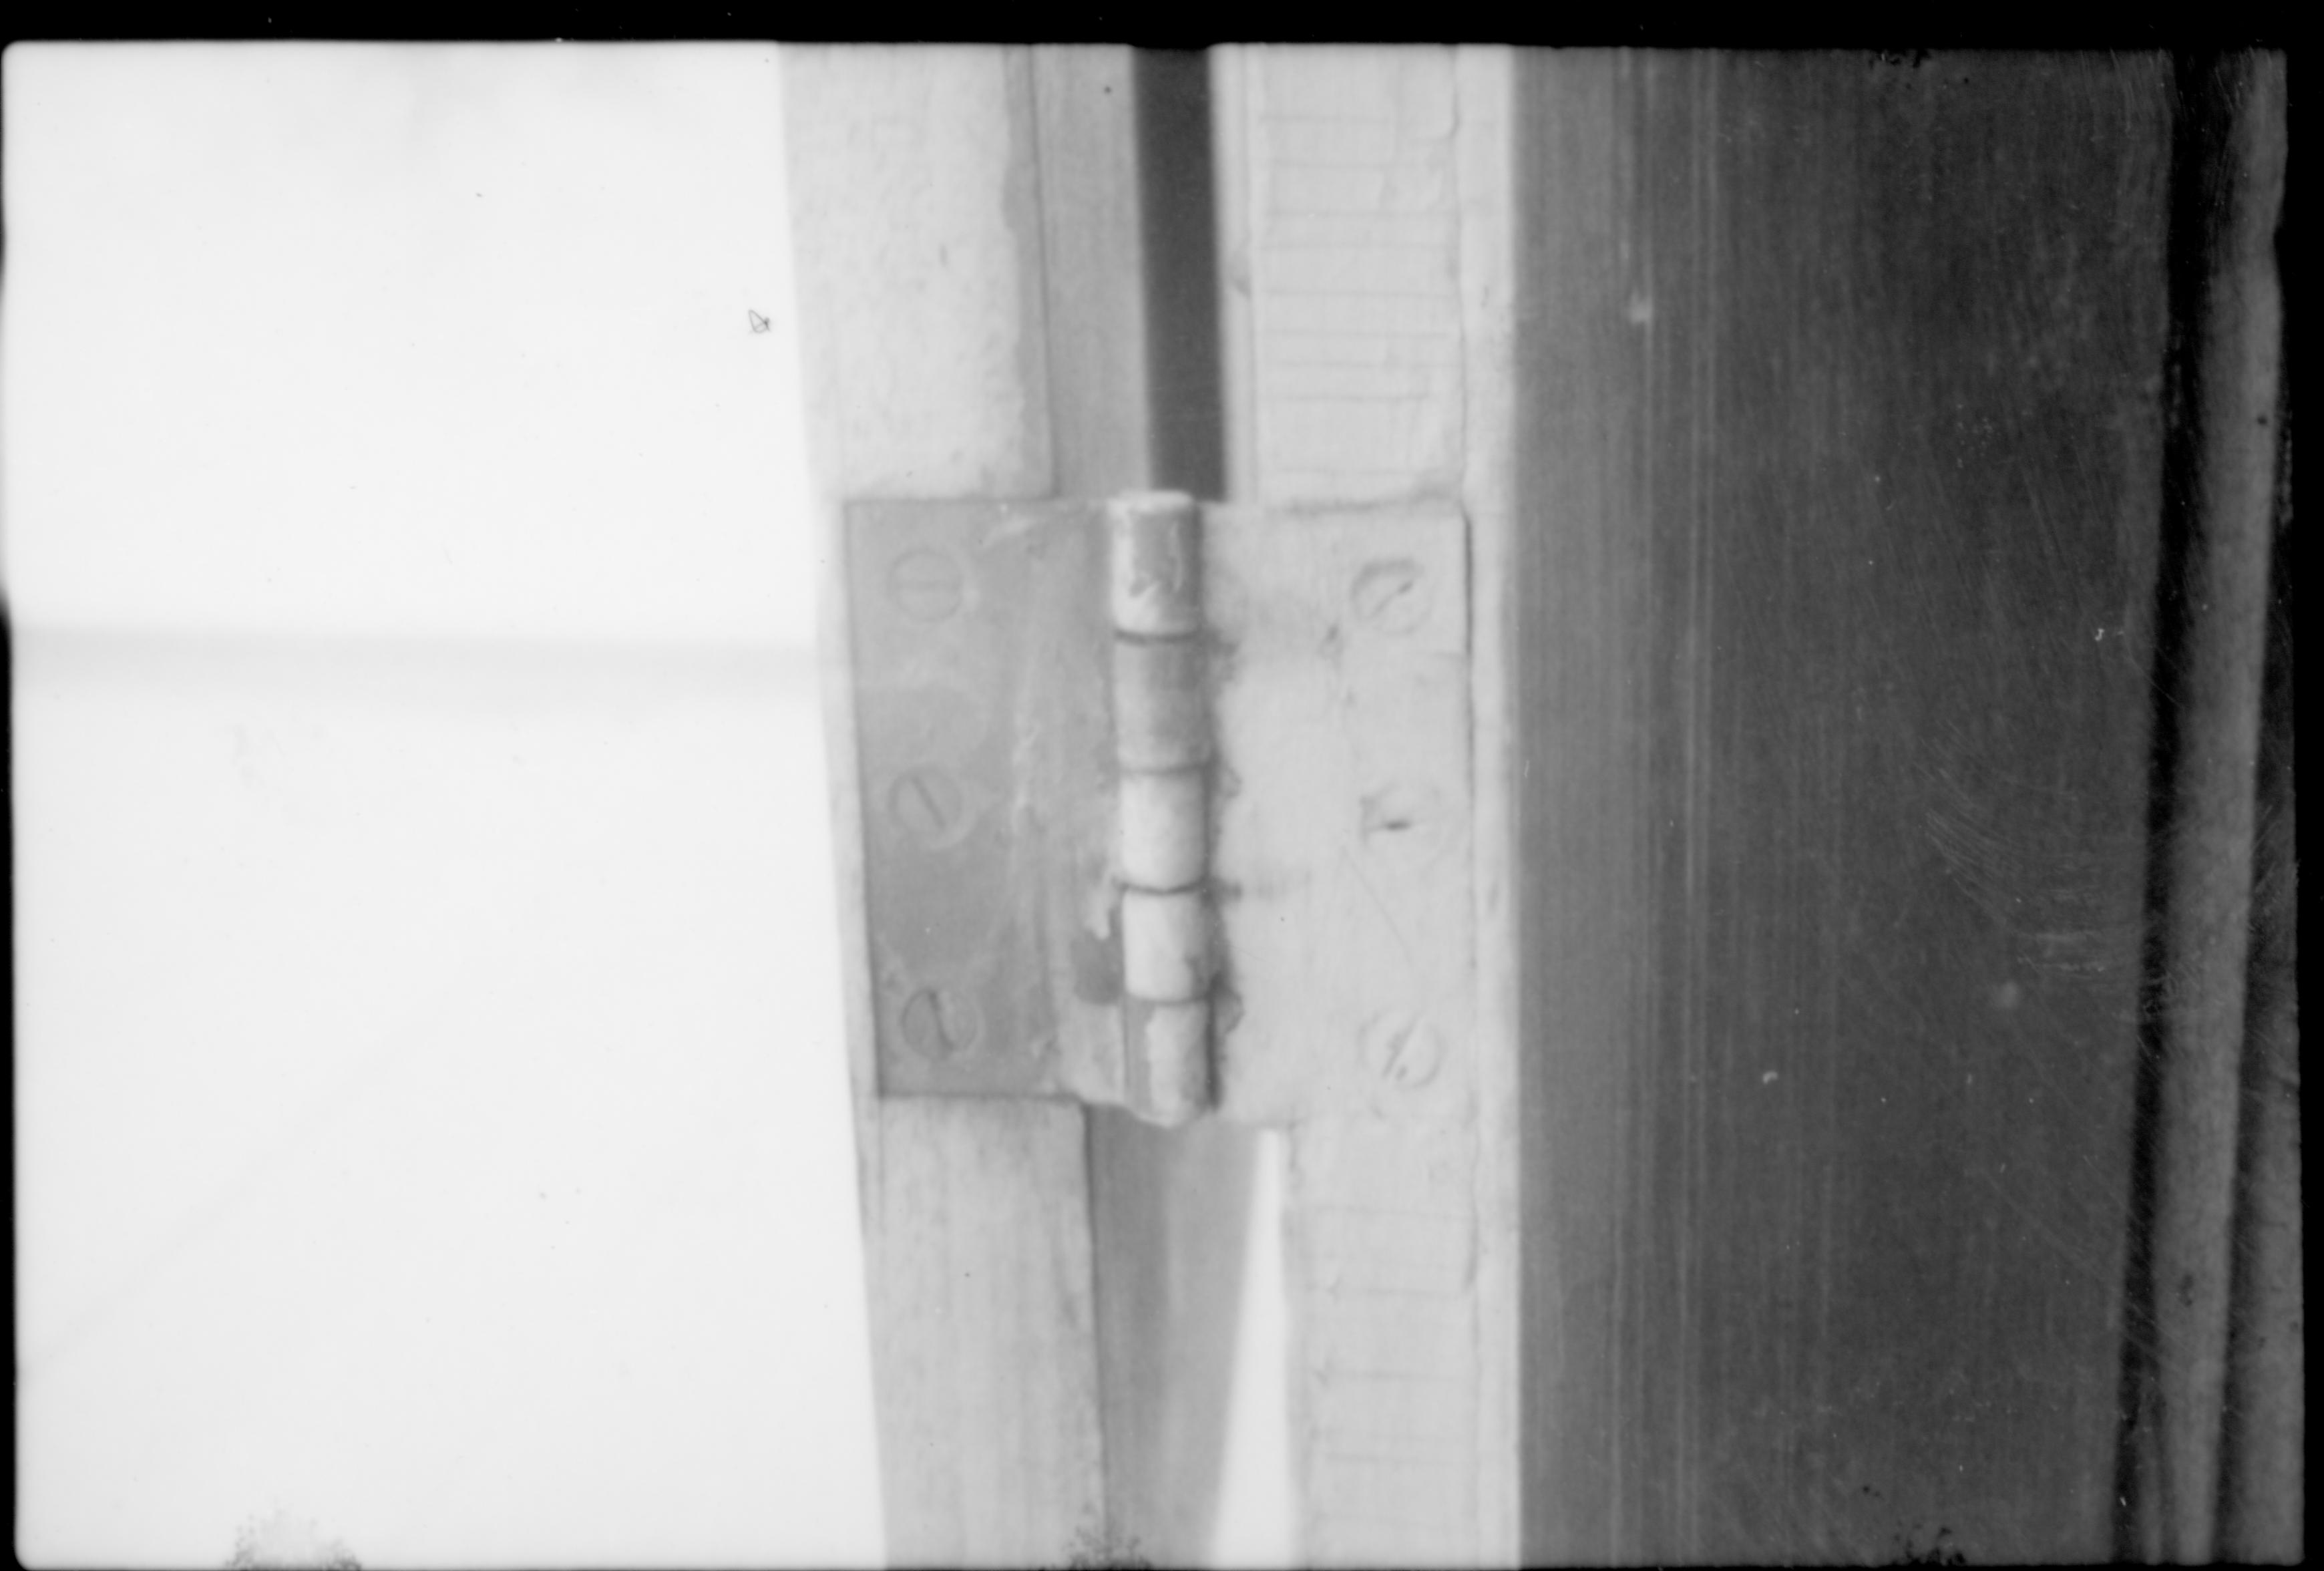 NA Lincoln, Home, Restoration, Door Hinge